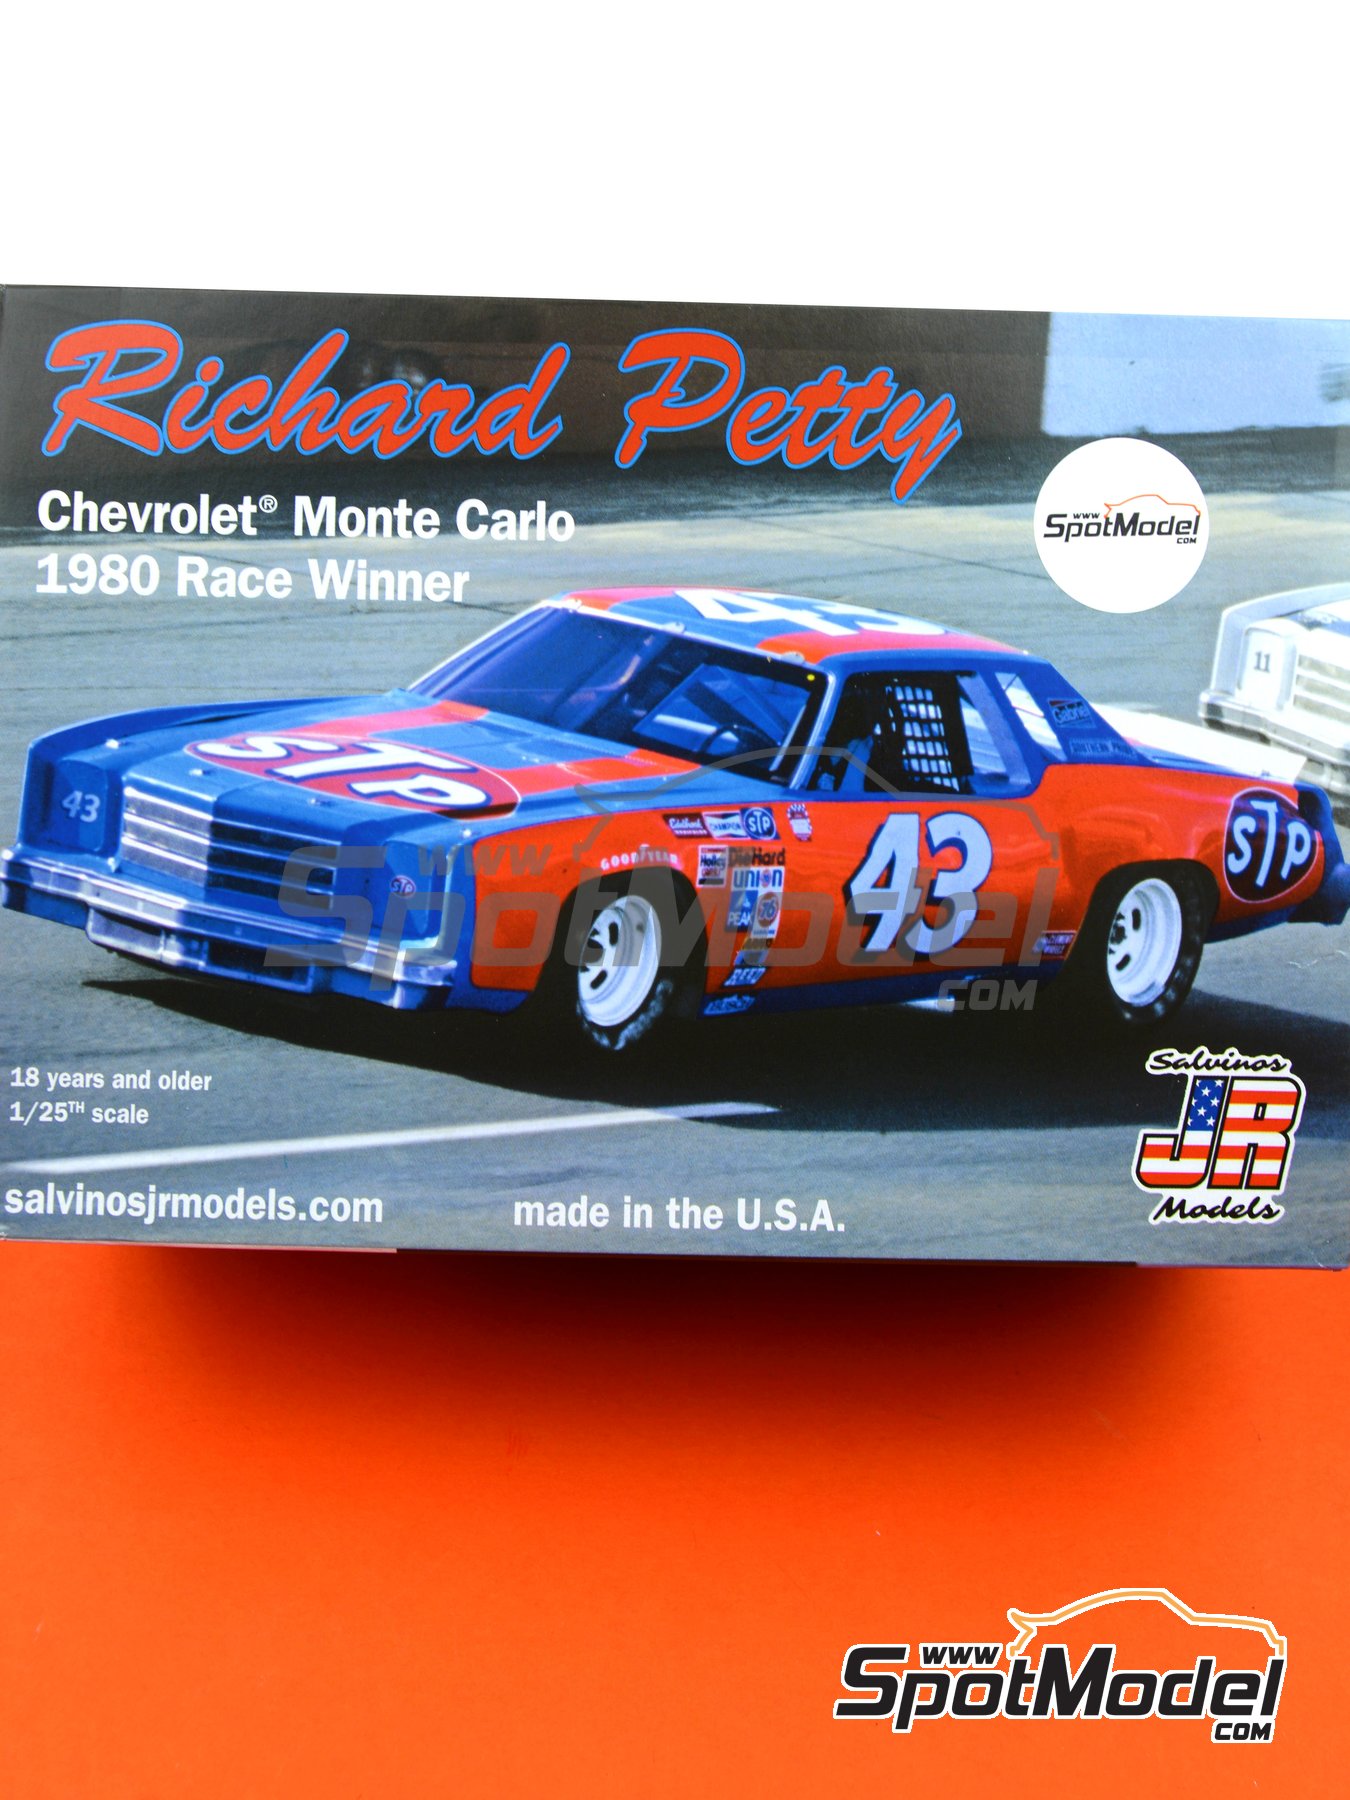 NASCAR DECAL #43 STP 1980 CHEVROLET MONTE CARLO RICHARD PETTY 1/25